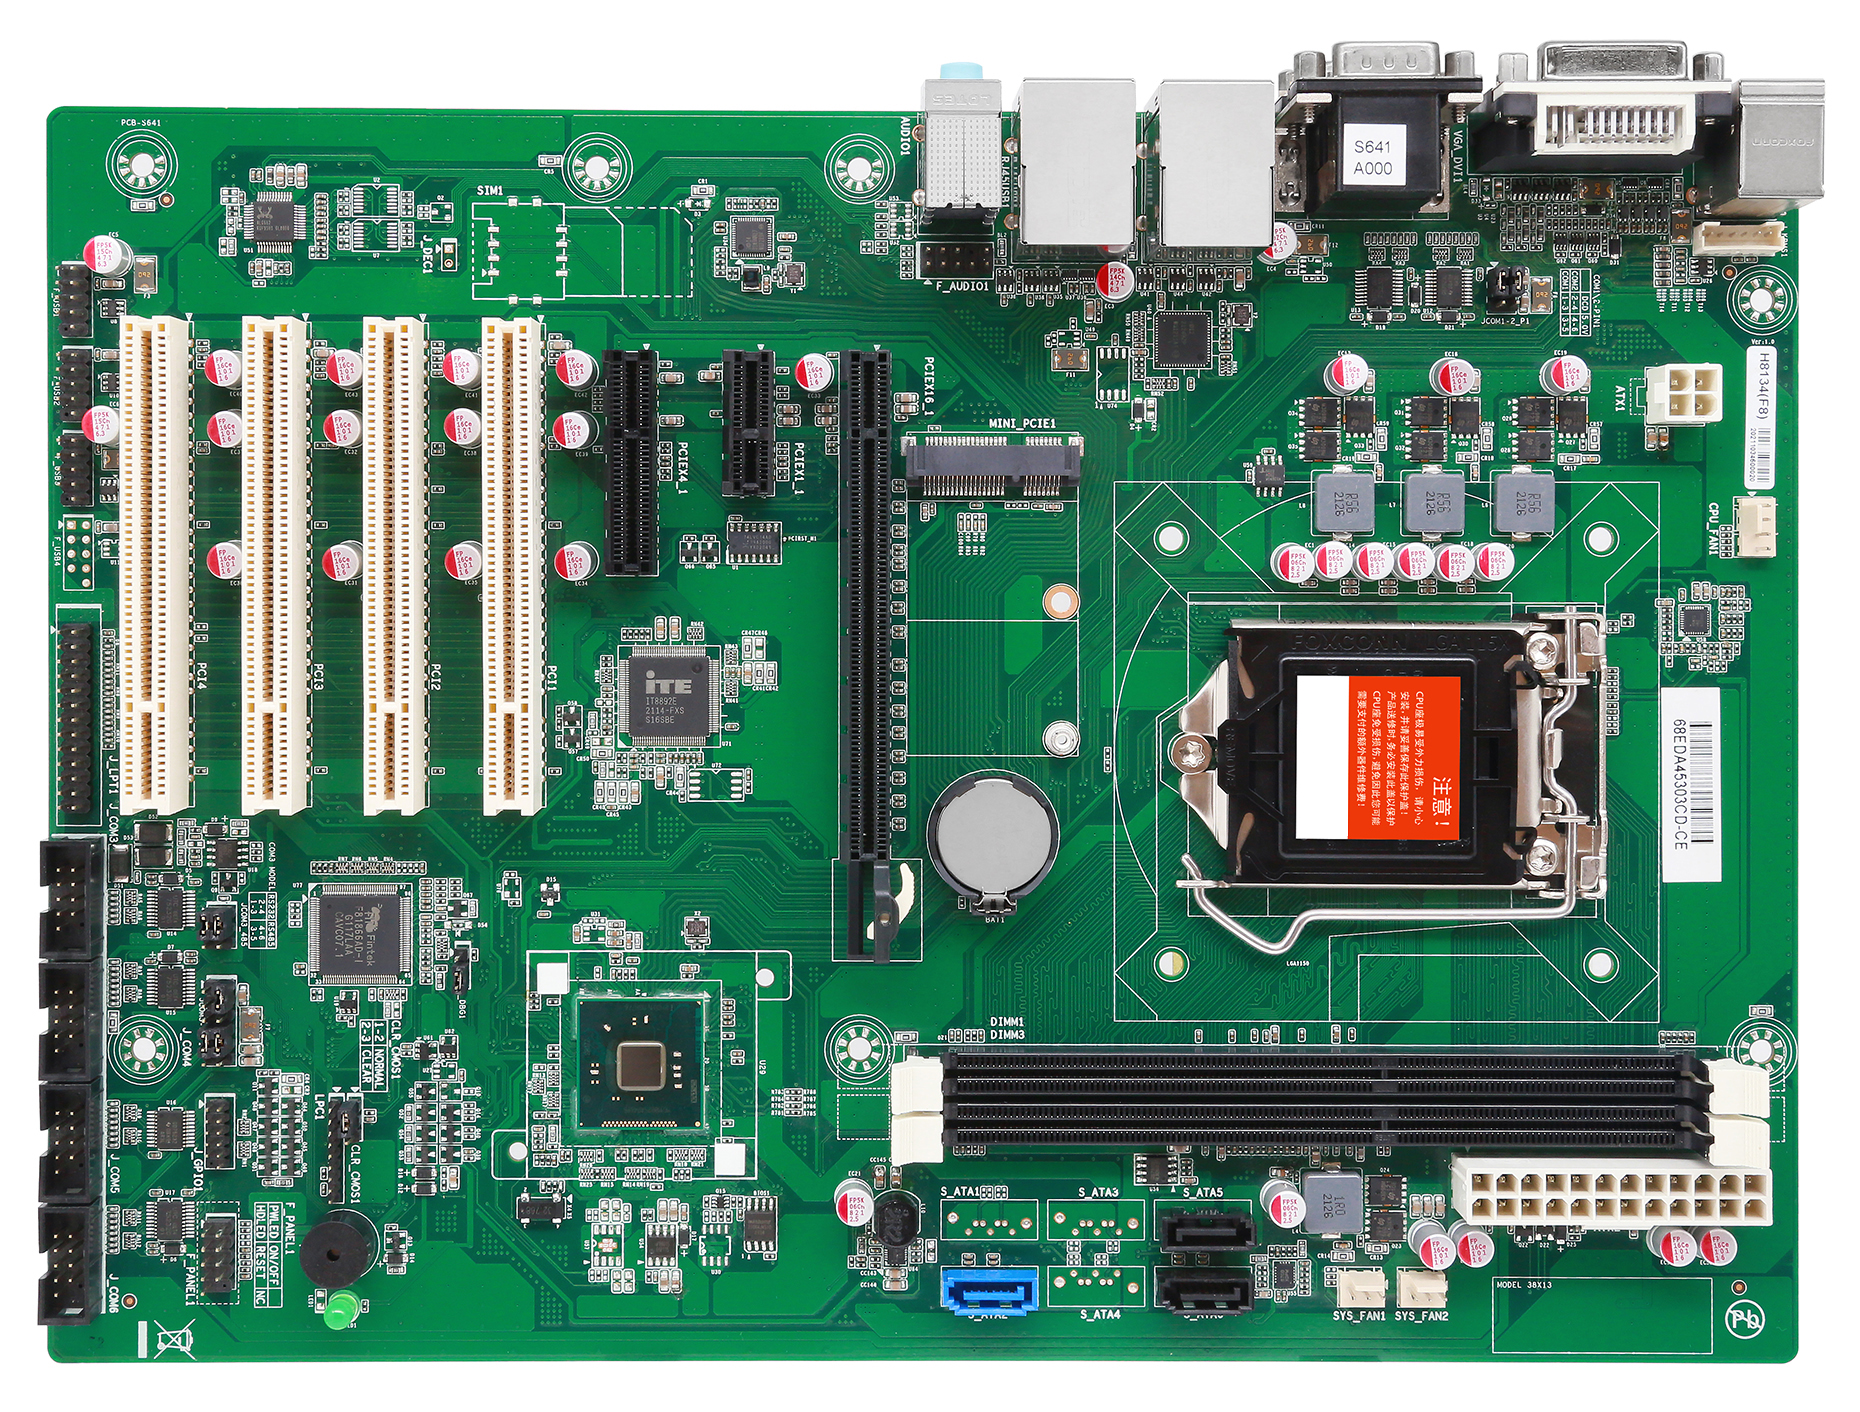 DMB-AH81 Industrial Motherboard with Intel® 4th Generation Core™ i3/i5/i7 CPU, H81 Chipset, 3x PCIe, 4x PCI, 6x COM, 10x USB, 2x LAN